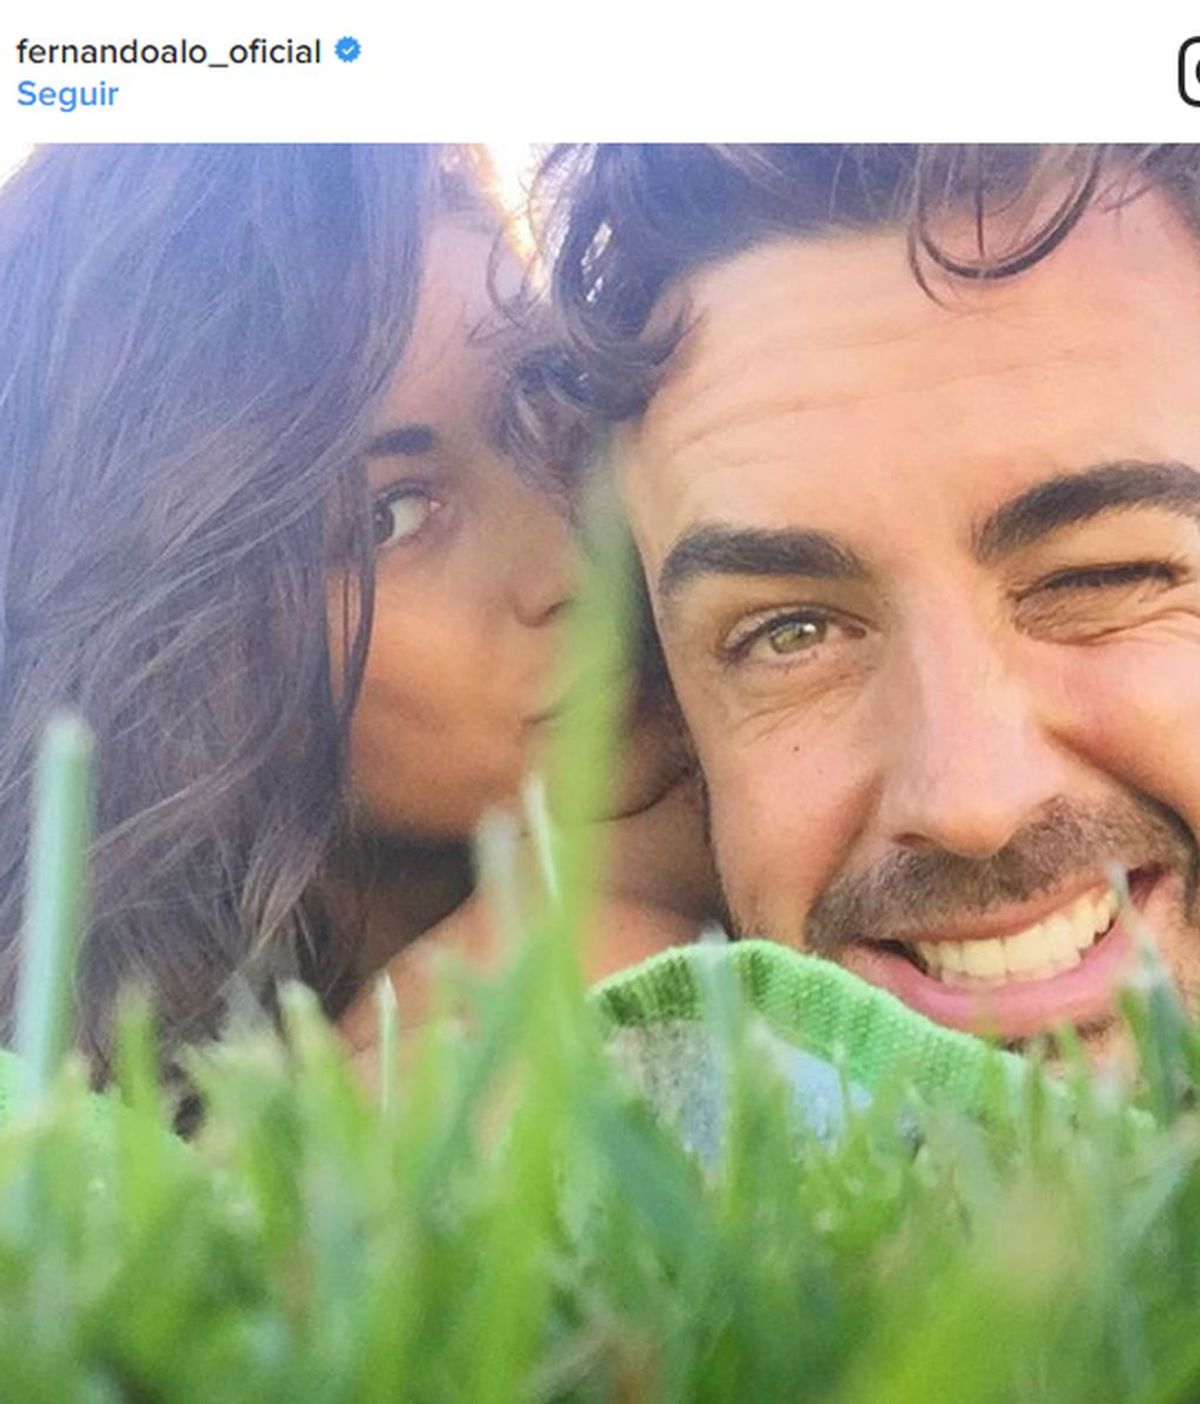 Fernando Alonso, enamoradísimo: "Cuando la vida te da miles de razones para sonreír"